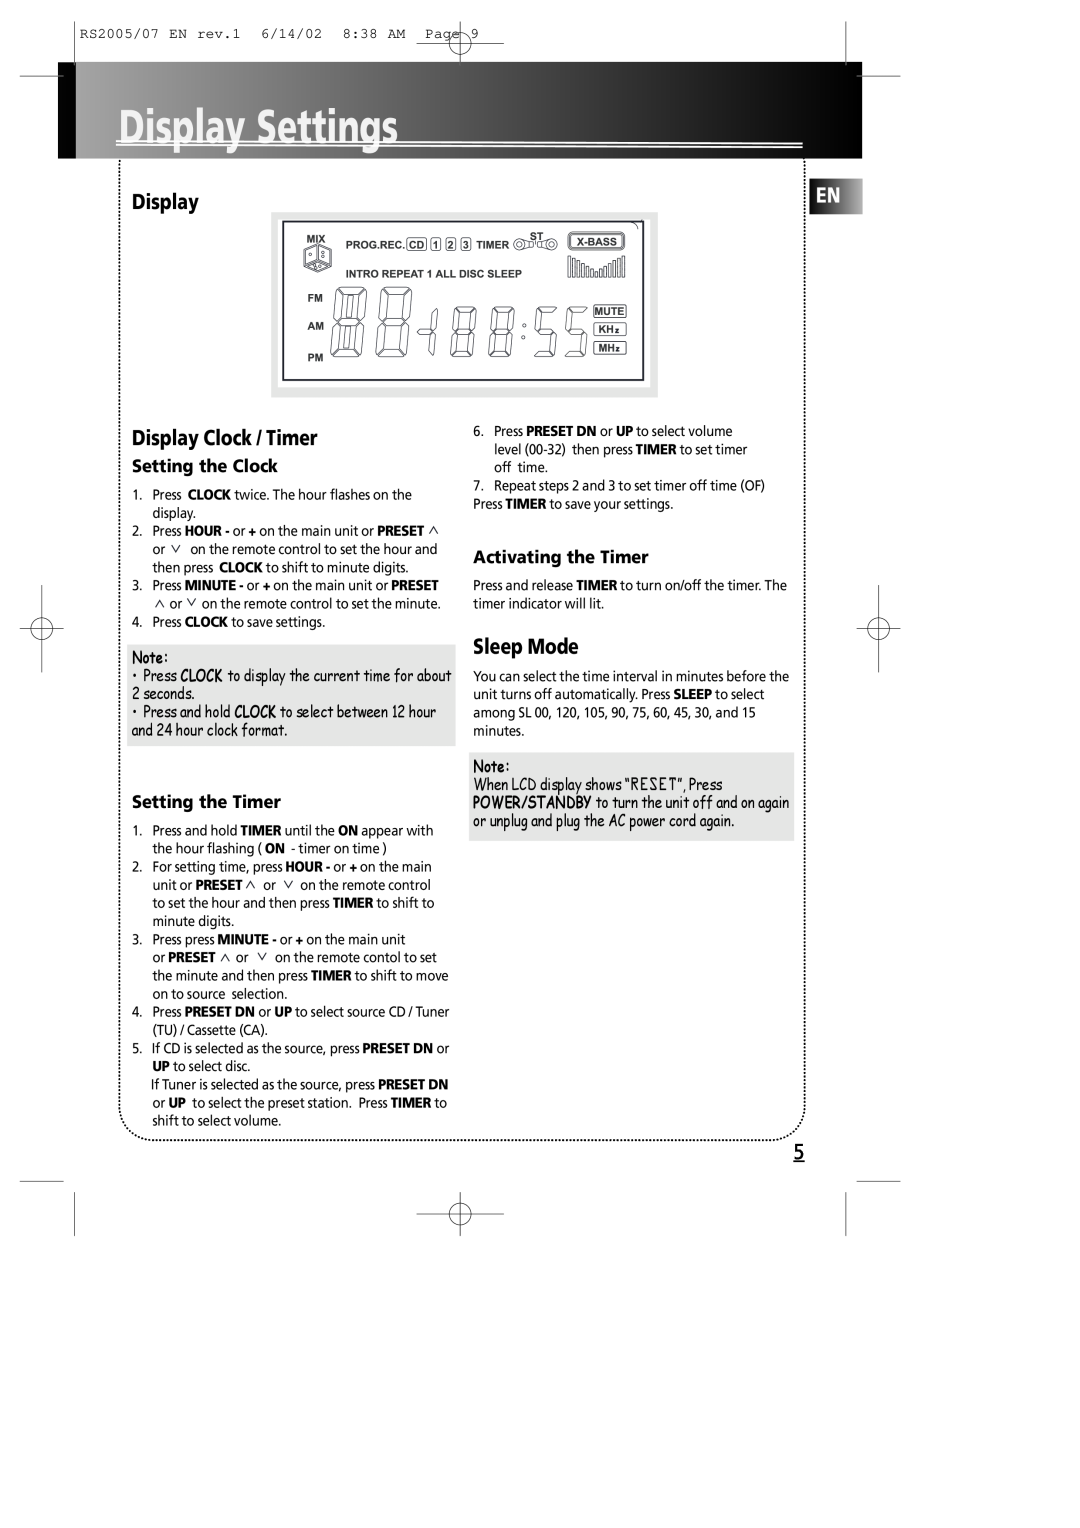 RCA RS2005 manual Display Settings, Display Clock / Timer, Sleep Mode, seconds 